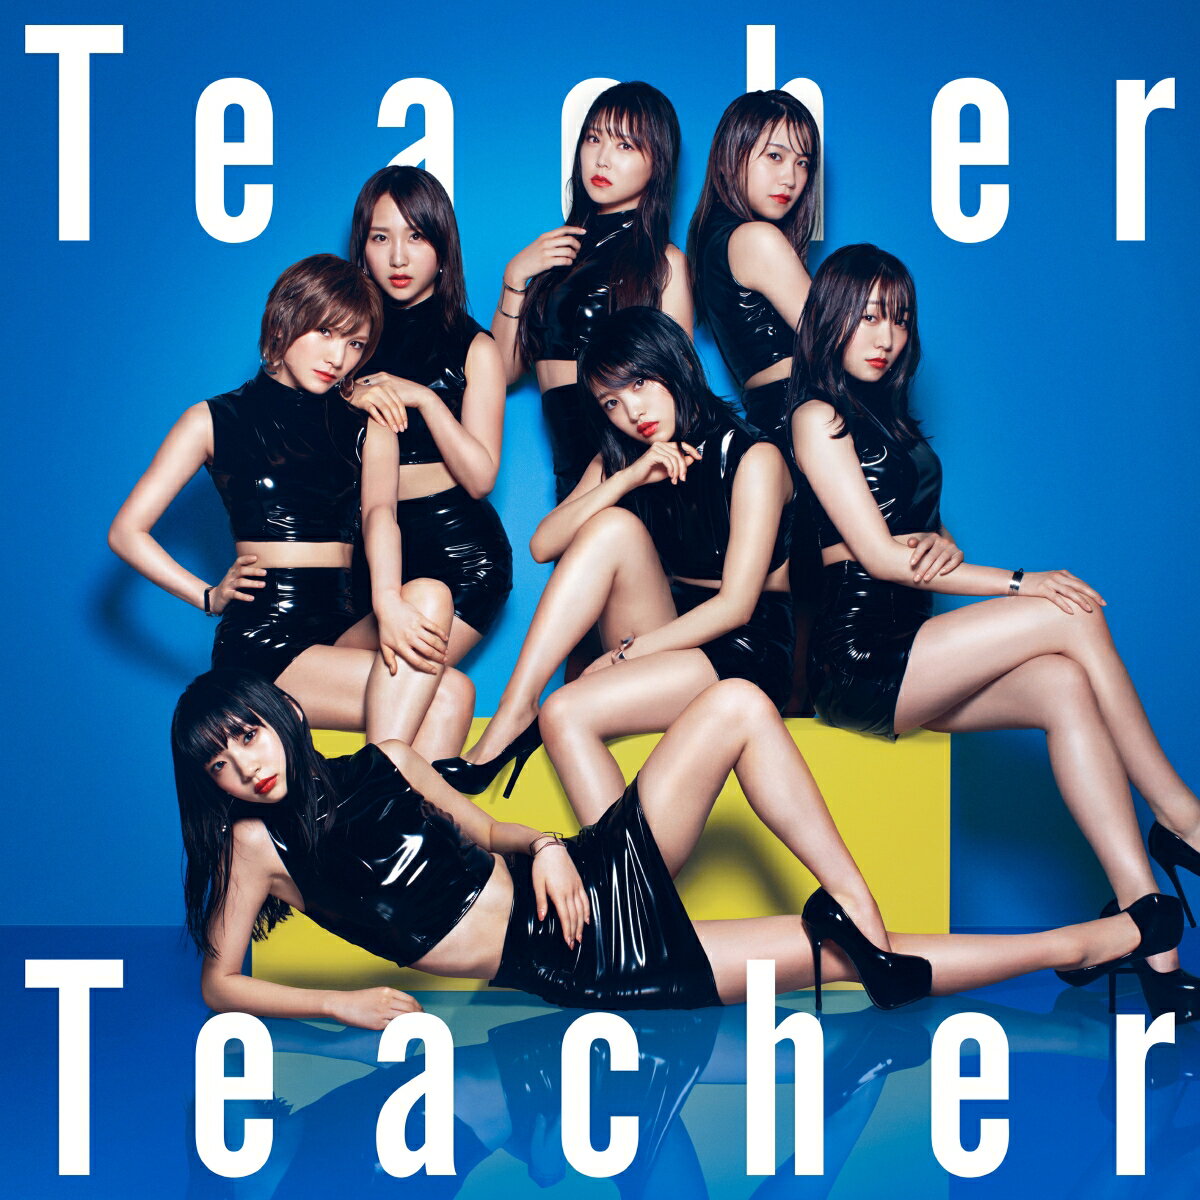 AKB48BKSCPN_【newcd】 ティーチャー ティーチャー エイケイビーフォーティエイト 発売日：2018年05月30日 予約締切日：2018年05月26日 TEACHER TEACHER JAN：4988003523817 KIZMー90559/60 キングレコード(株) 初回限定 キングレコード(株) [Disc1] 『Teacher Teacher』／CD アーティスト：AKB48 曲目タイトル： &nbsp;1. Teacher Teacher [4:29] &nbsp;2. 君は僕の風 [3:59] &nbsp;3. 終電の夜 [4:38] &nbsp;4. Teacher Teacher ーoff vocal ver.ー [4:29] &nbsp;5. 君は僕の風 ーoff vocal ver.ー [3:58] &nbsp;6. 終電の夜 ーoff vocal ver.ー [4:36] [Disc2] 『Teacher Teacher』／DVD アーティスト：AKB48 曲目タイトル： 1.Teacher Teacher ーMusic Videoー[4:26] 2.君は僕の風 ーMusic Videoー[3:55] 3.終電の夜 ーMusic Videoー[4:32] CD JーPOP ポップス DVD・ブルーレイ付